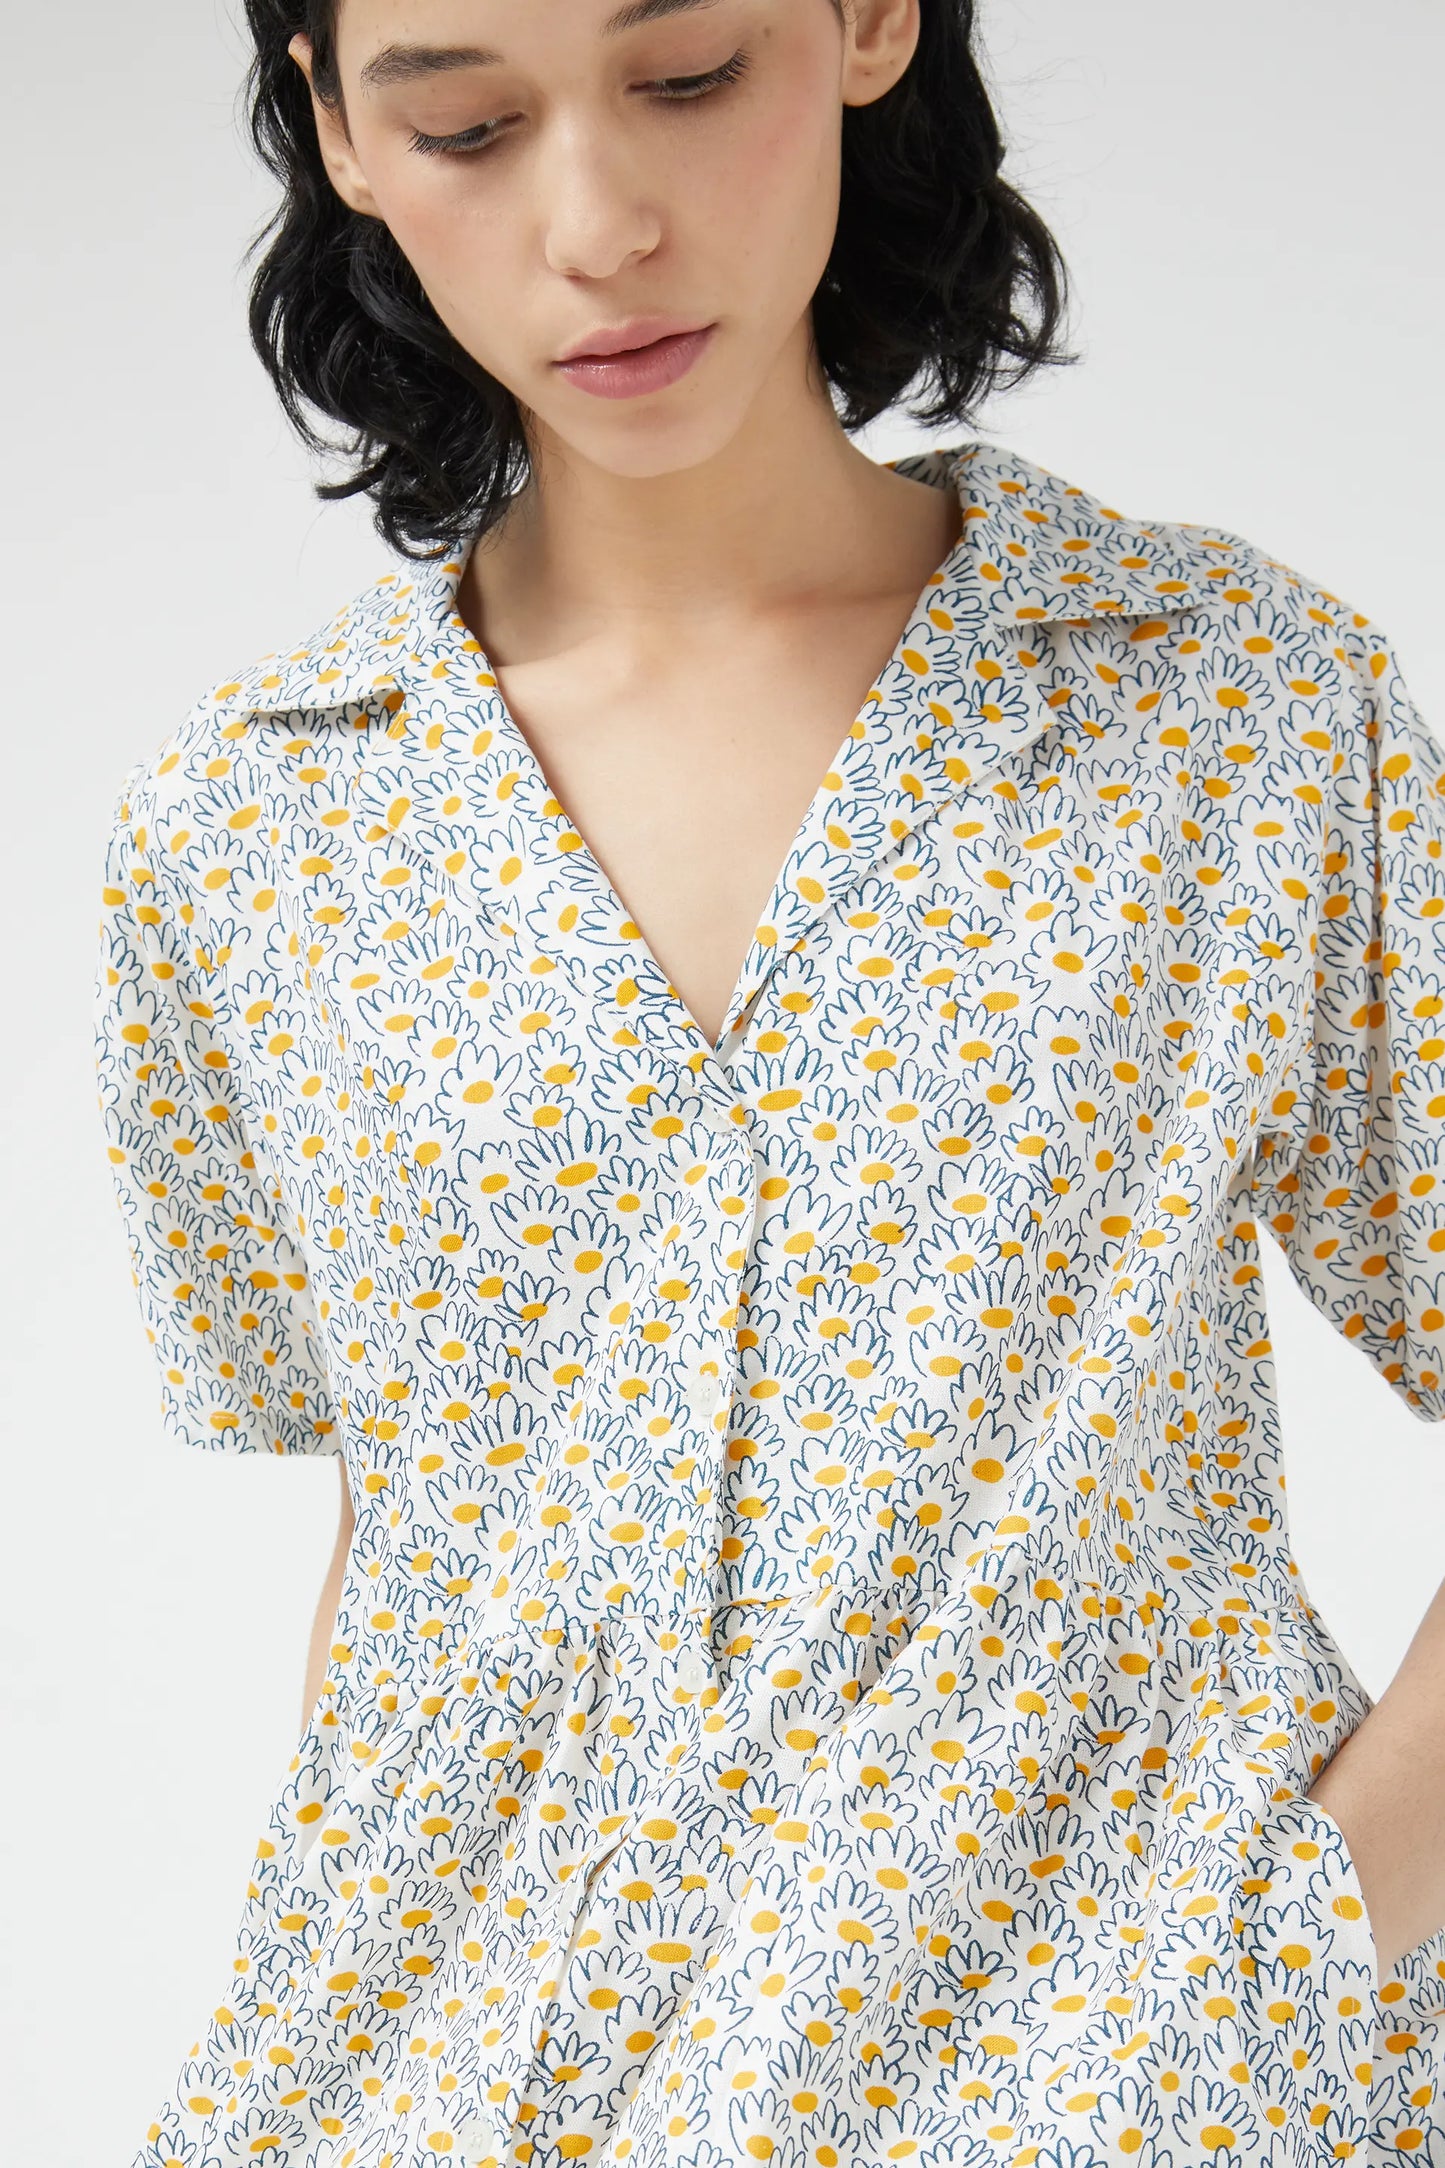 Marguerite floral shirt midi dress